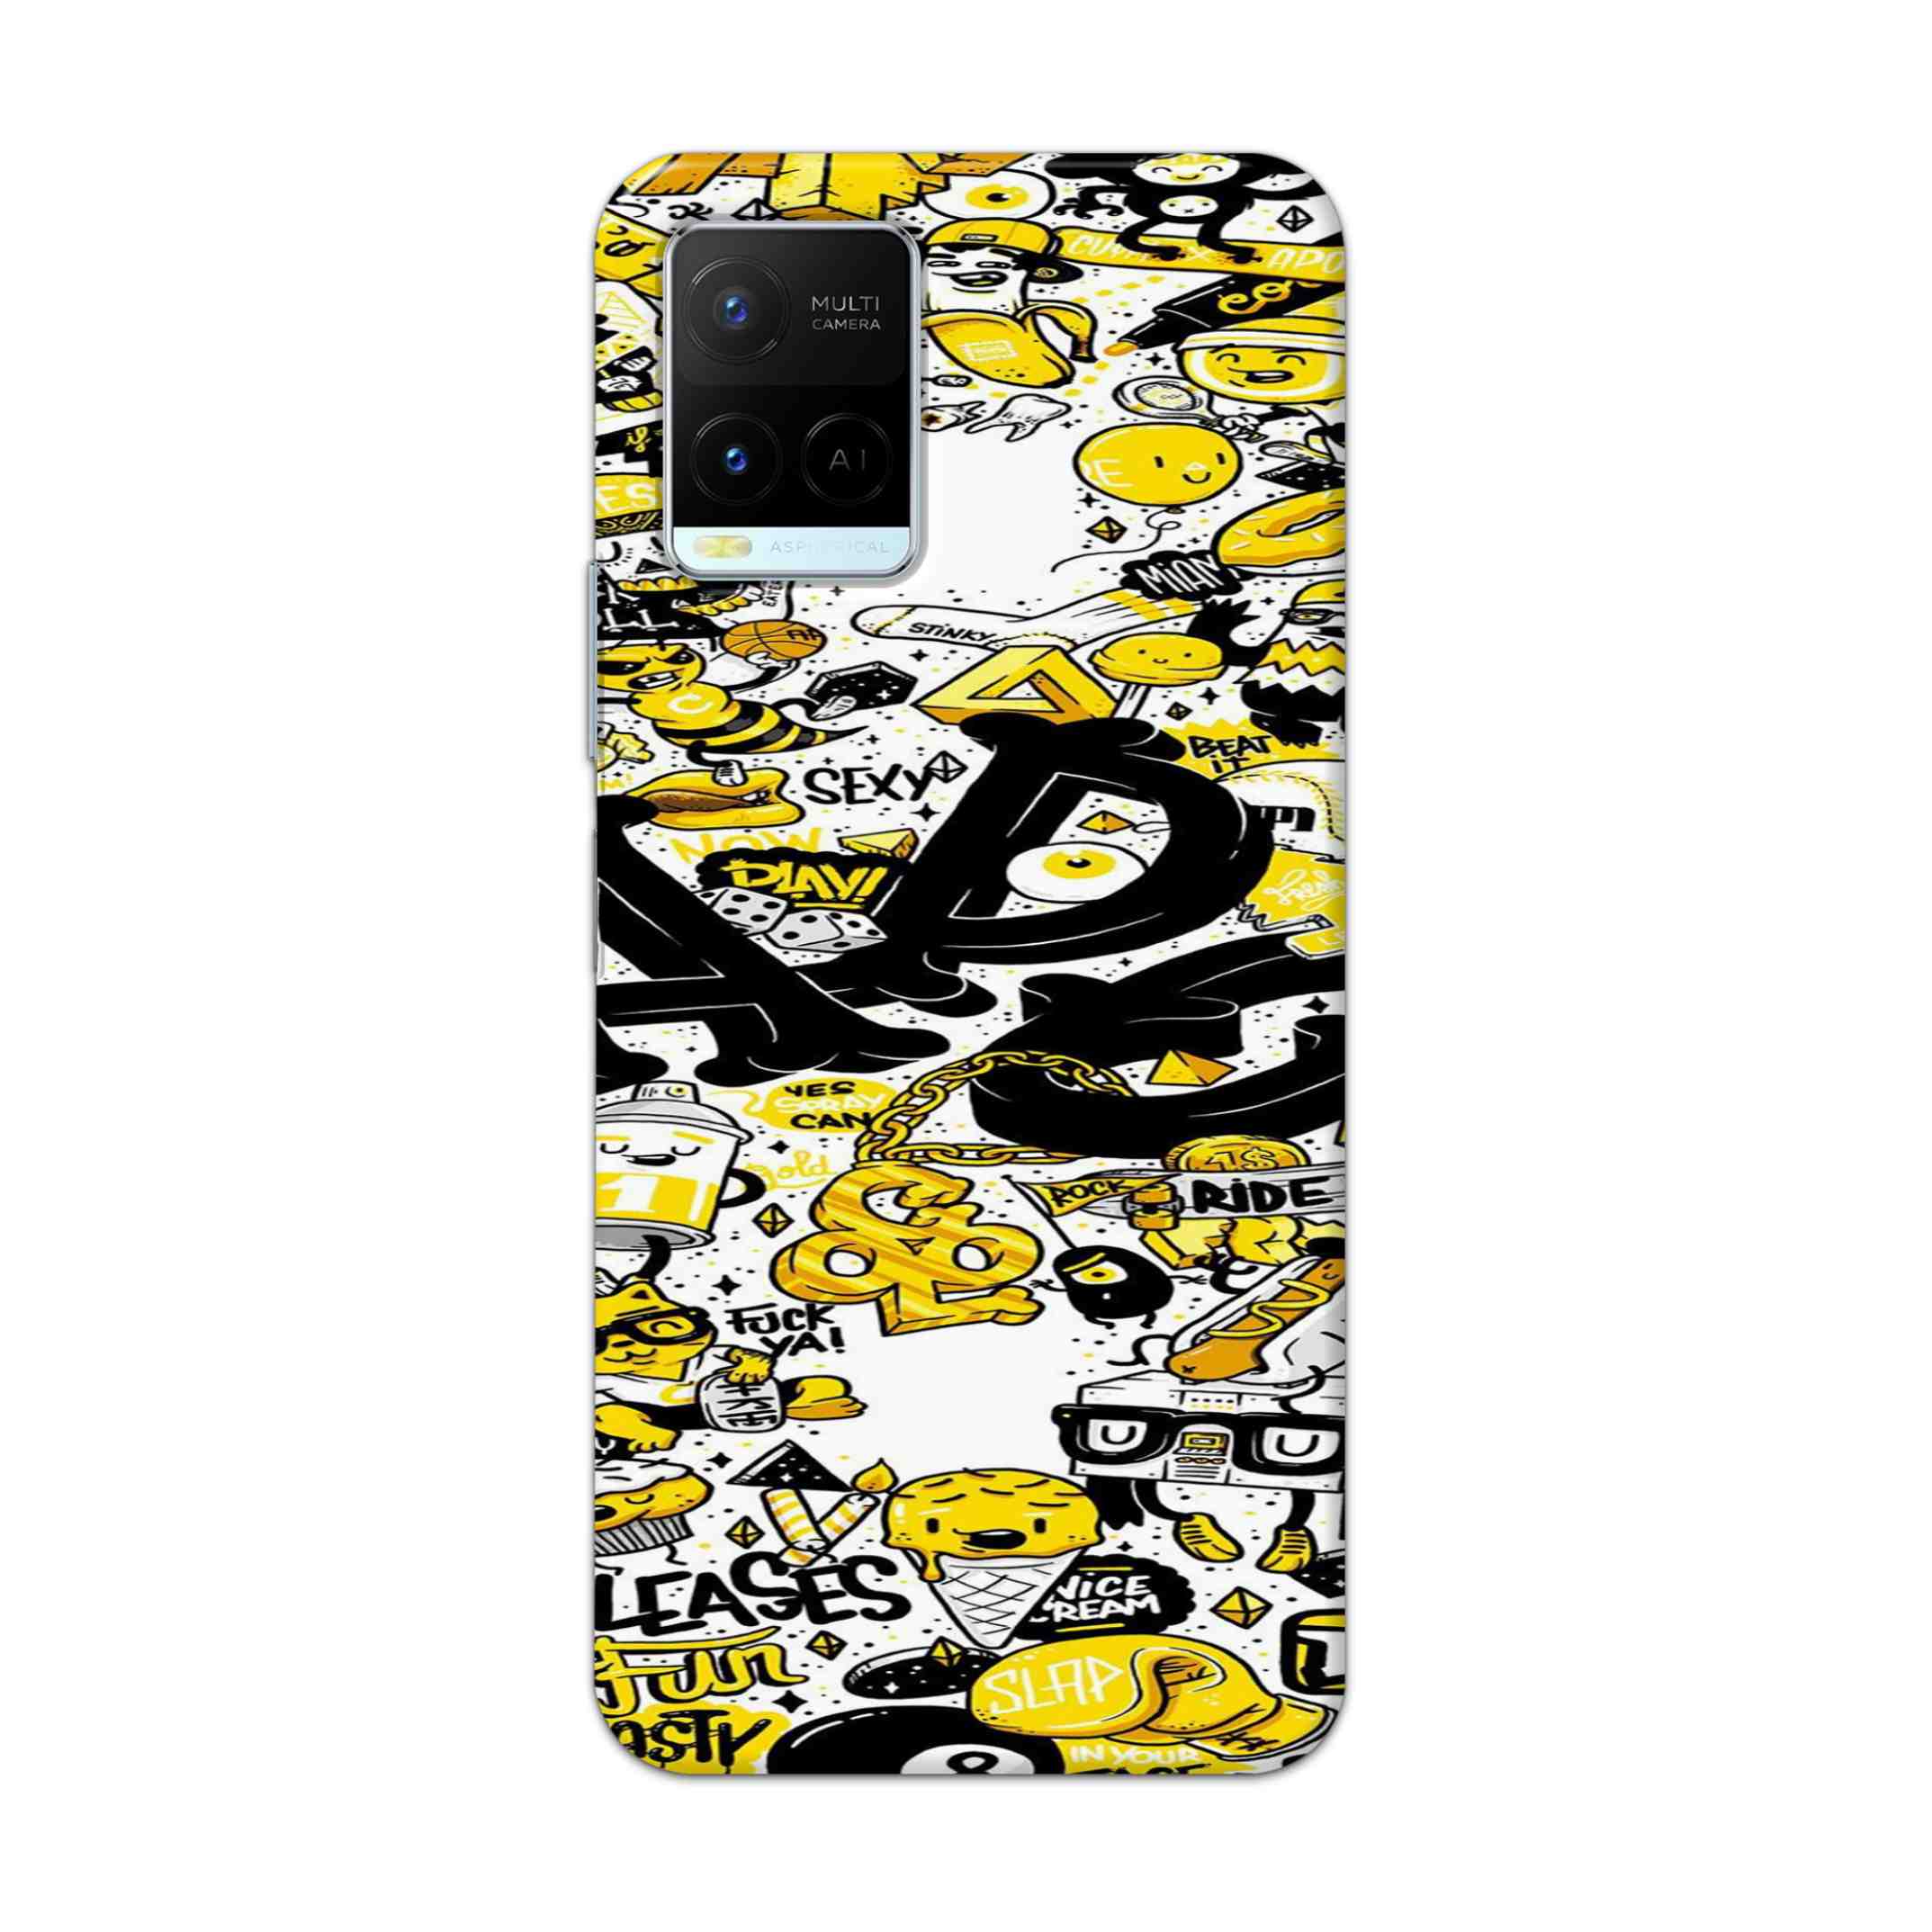 Buy Ado Hard Back Mobile Phone Case Cover For Vivo Y21 2021 Online